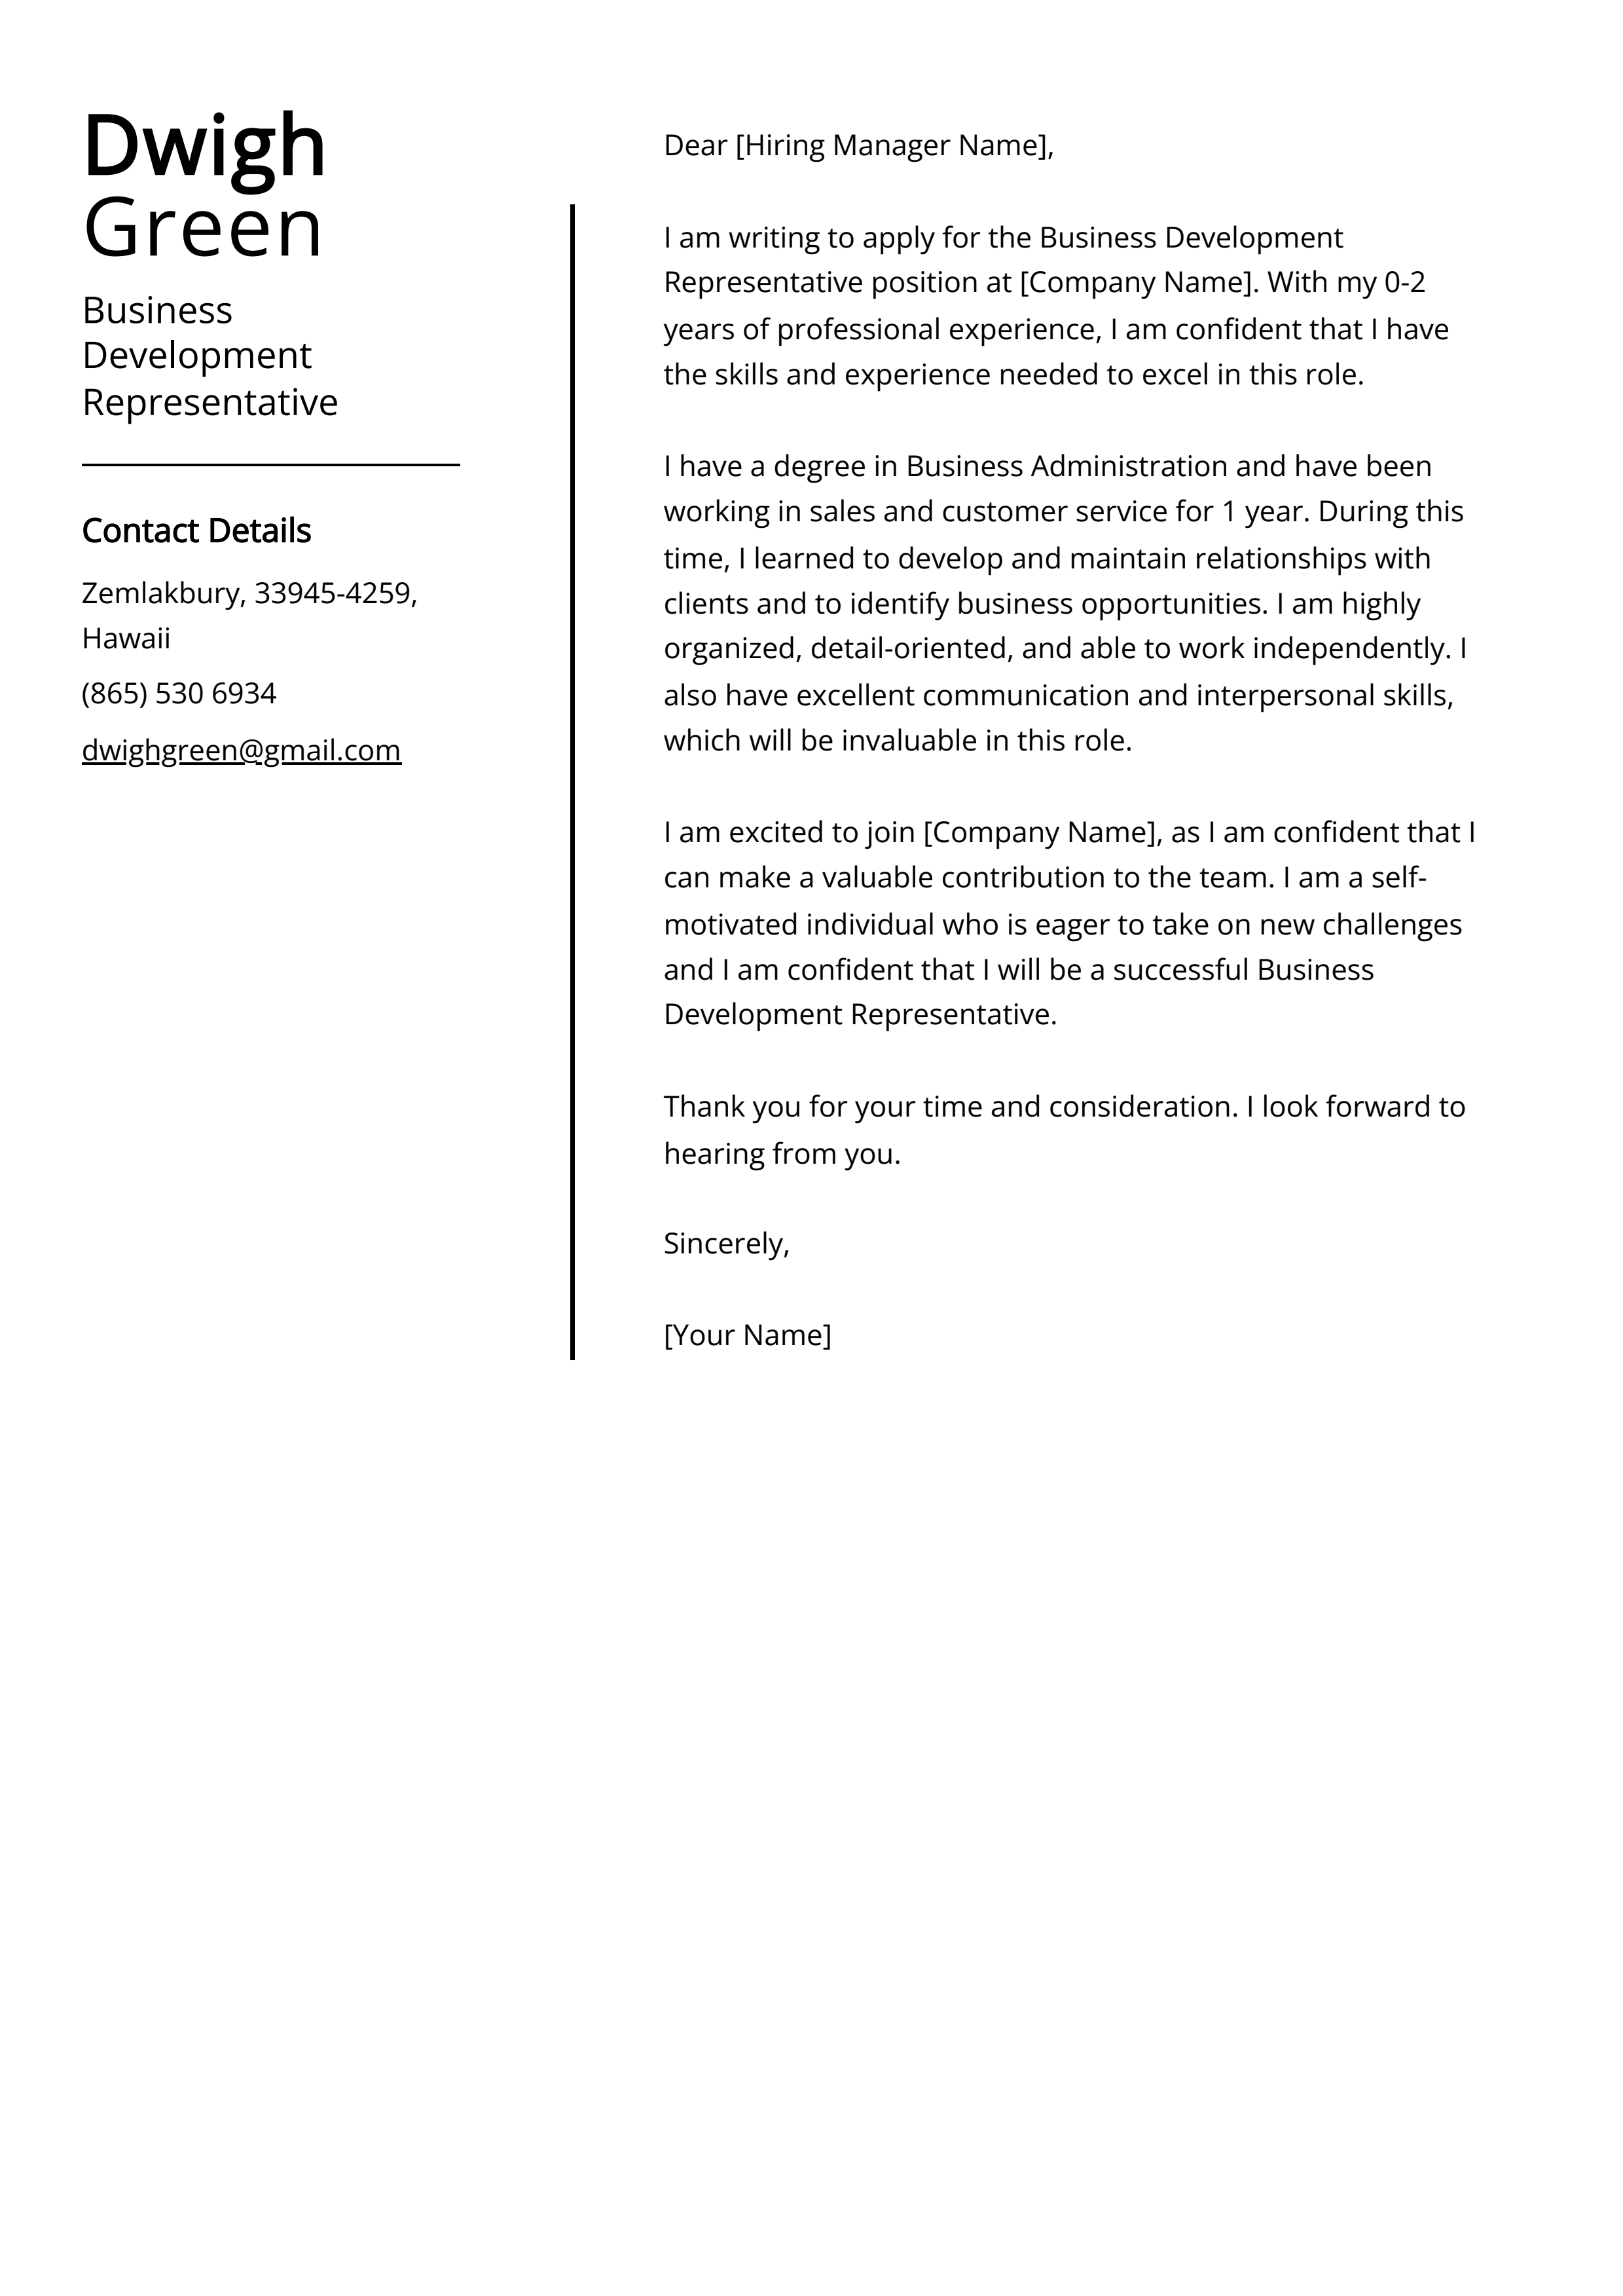 Business Development Representative Cover Letter Example